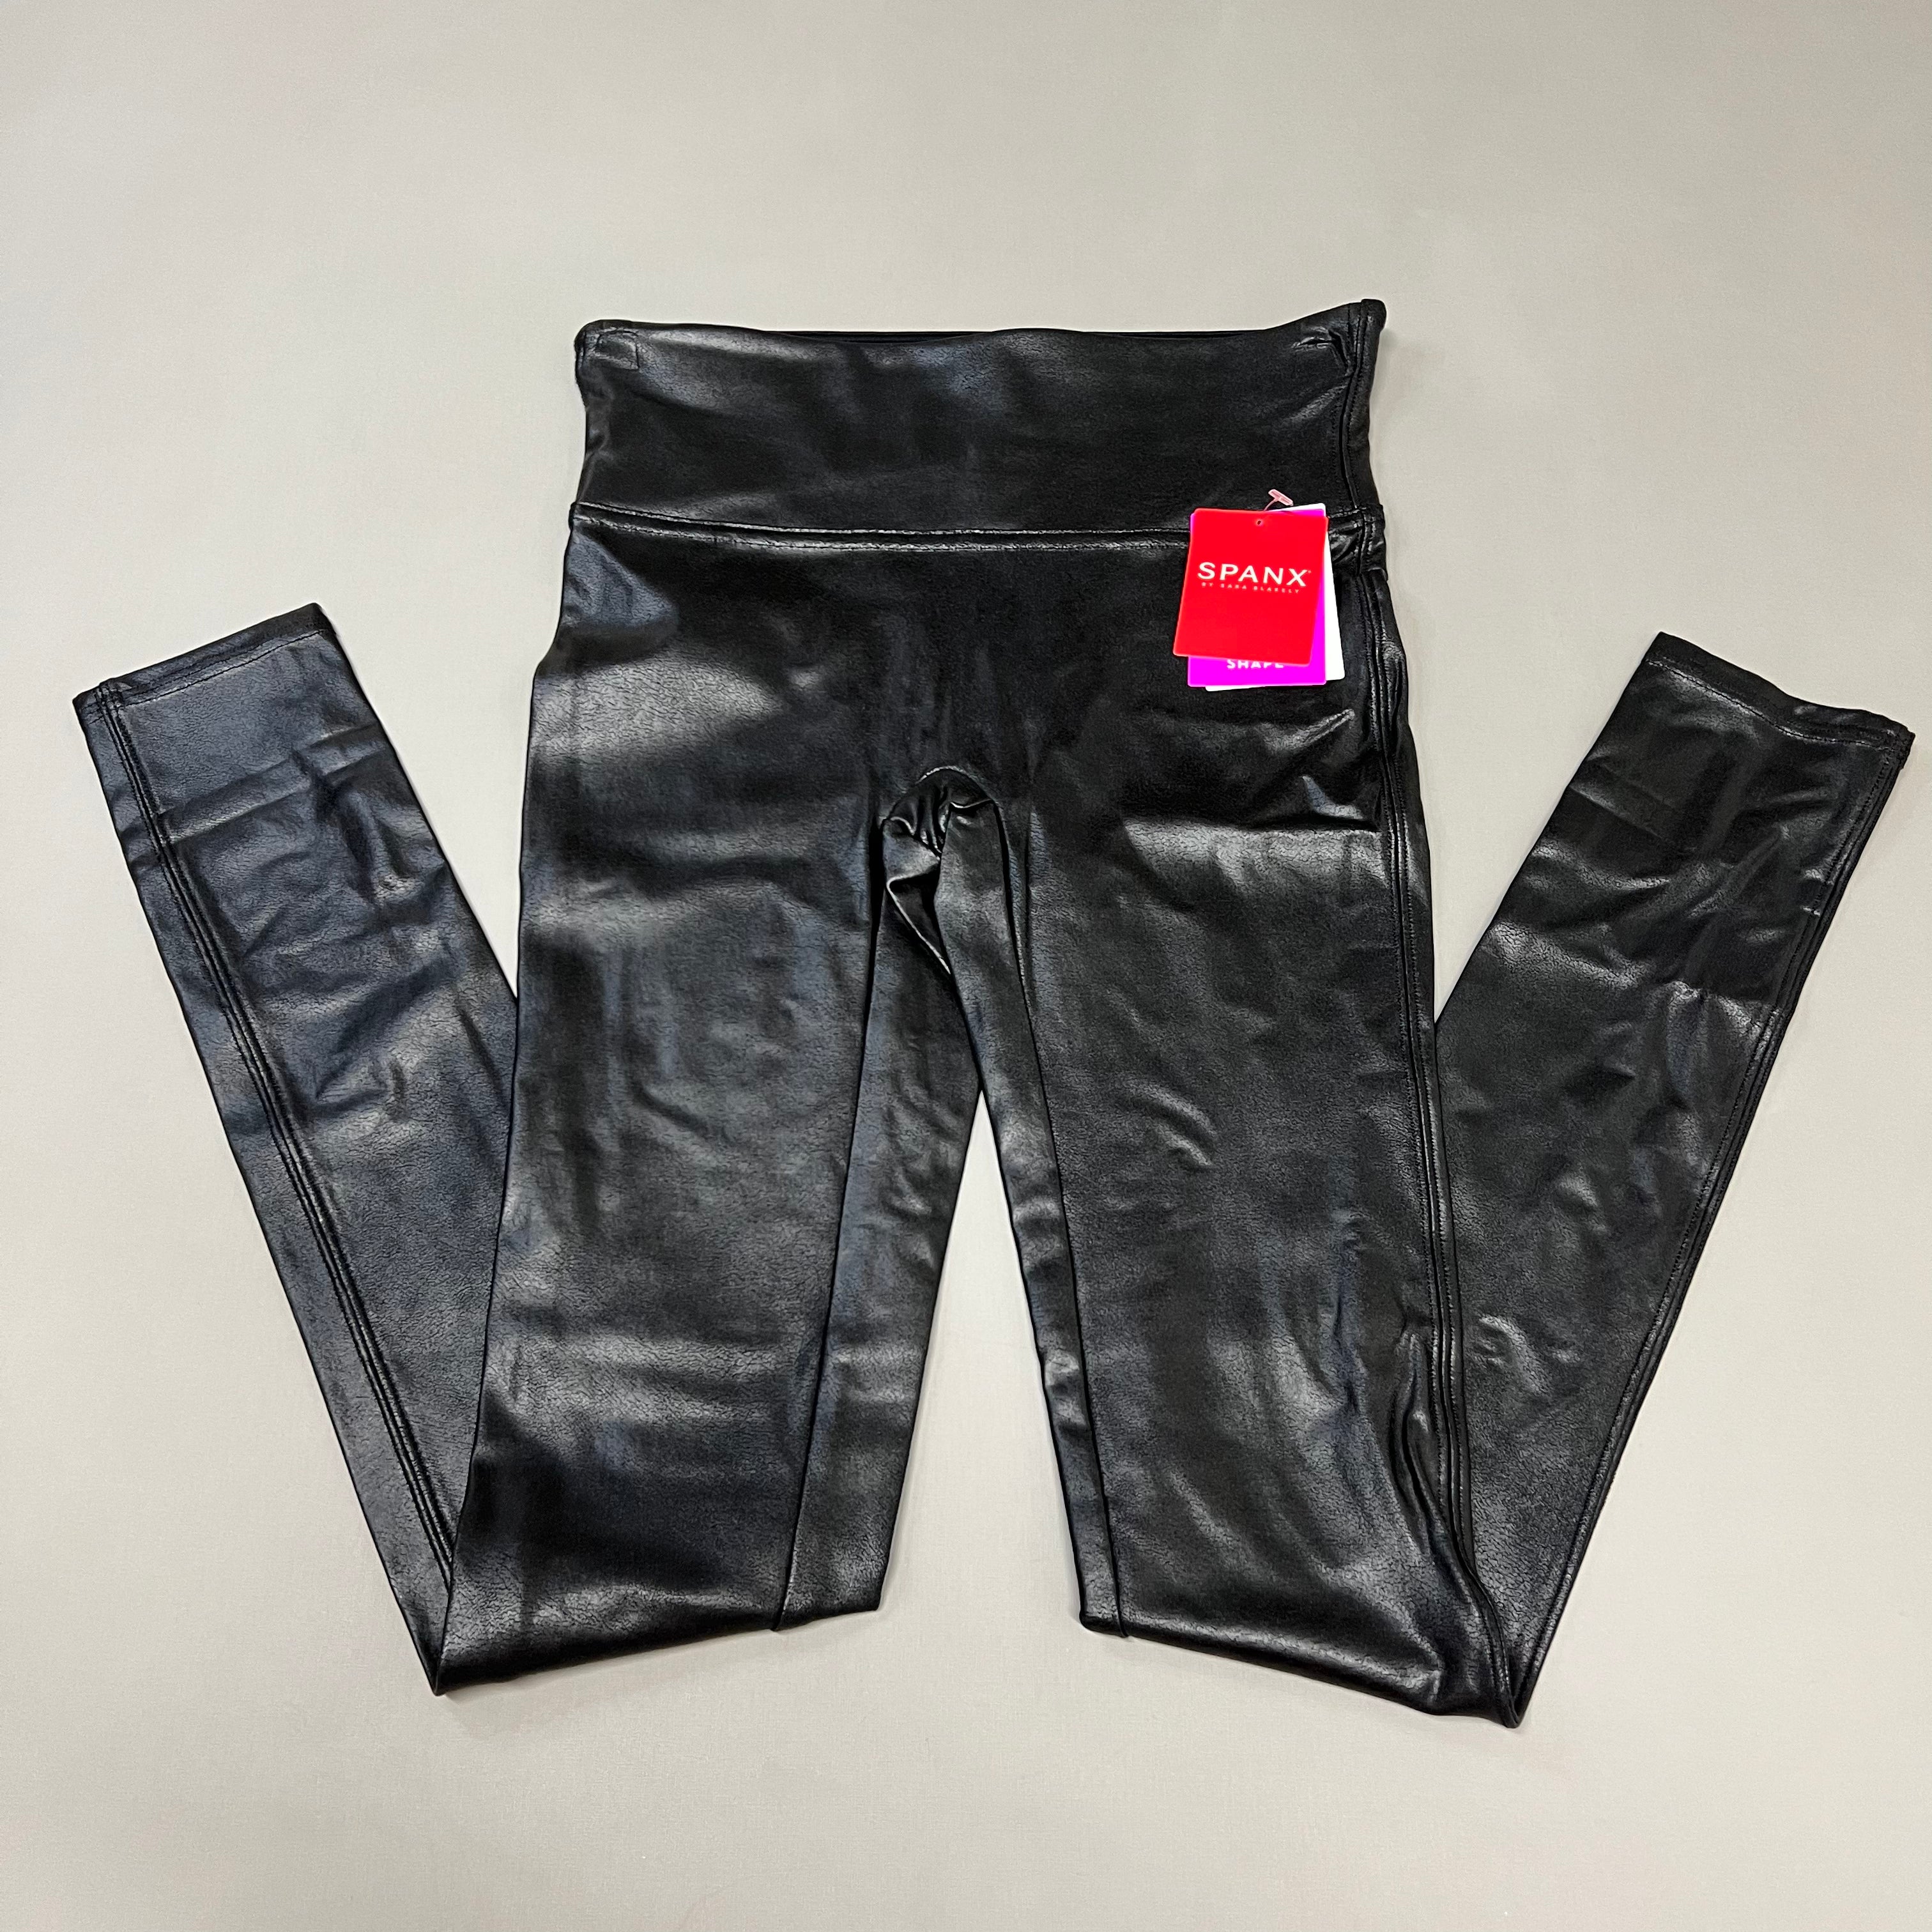 Spanx Faux Leather Legging Black size SP